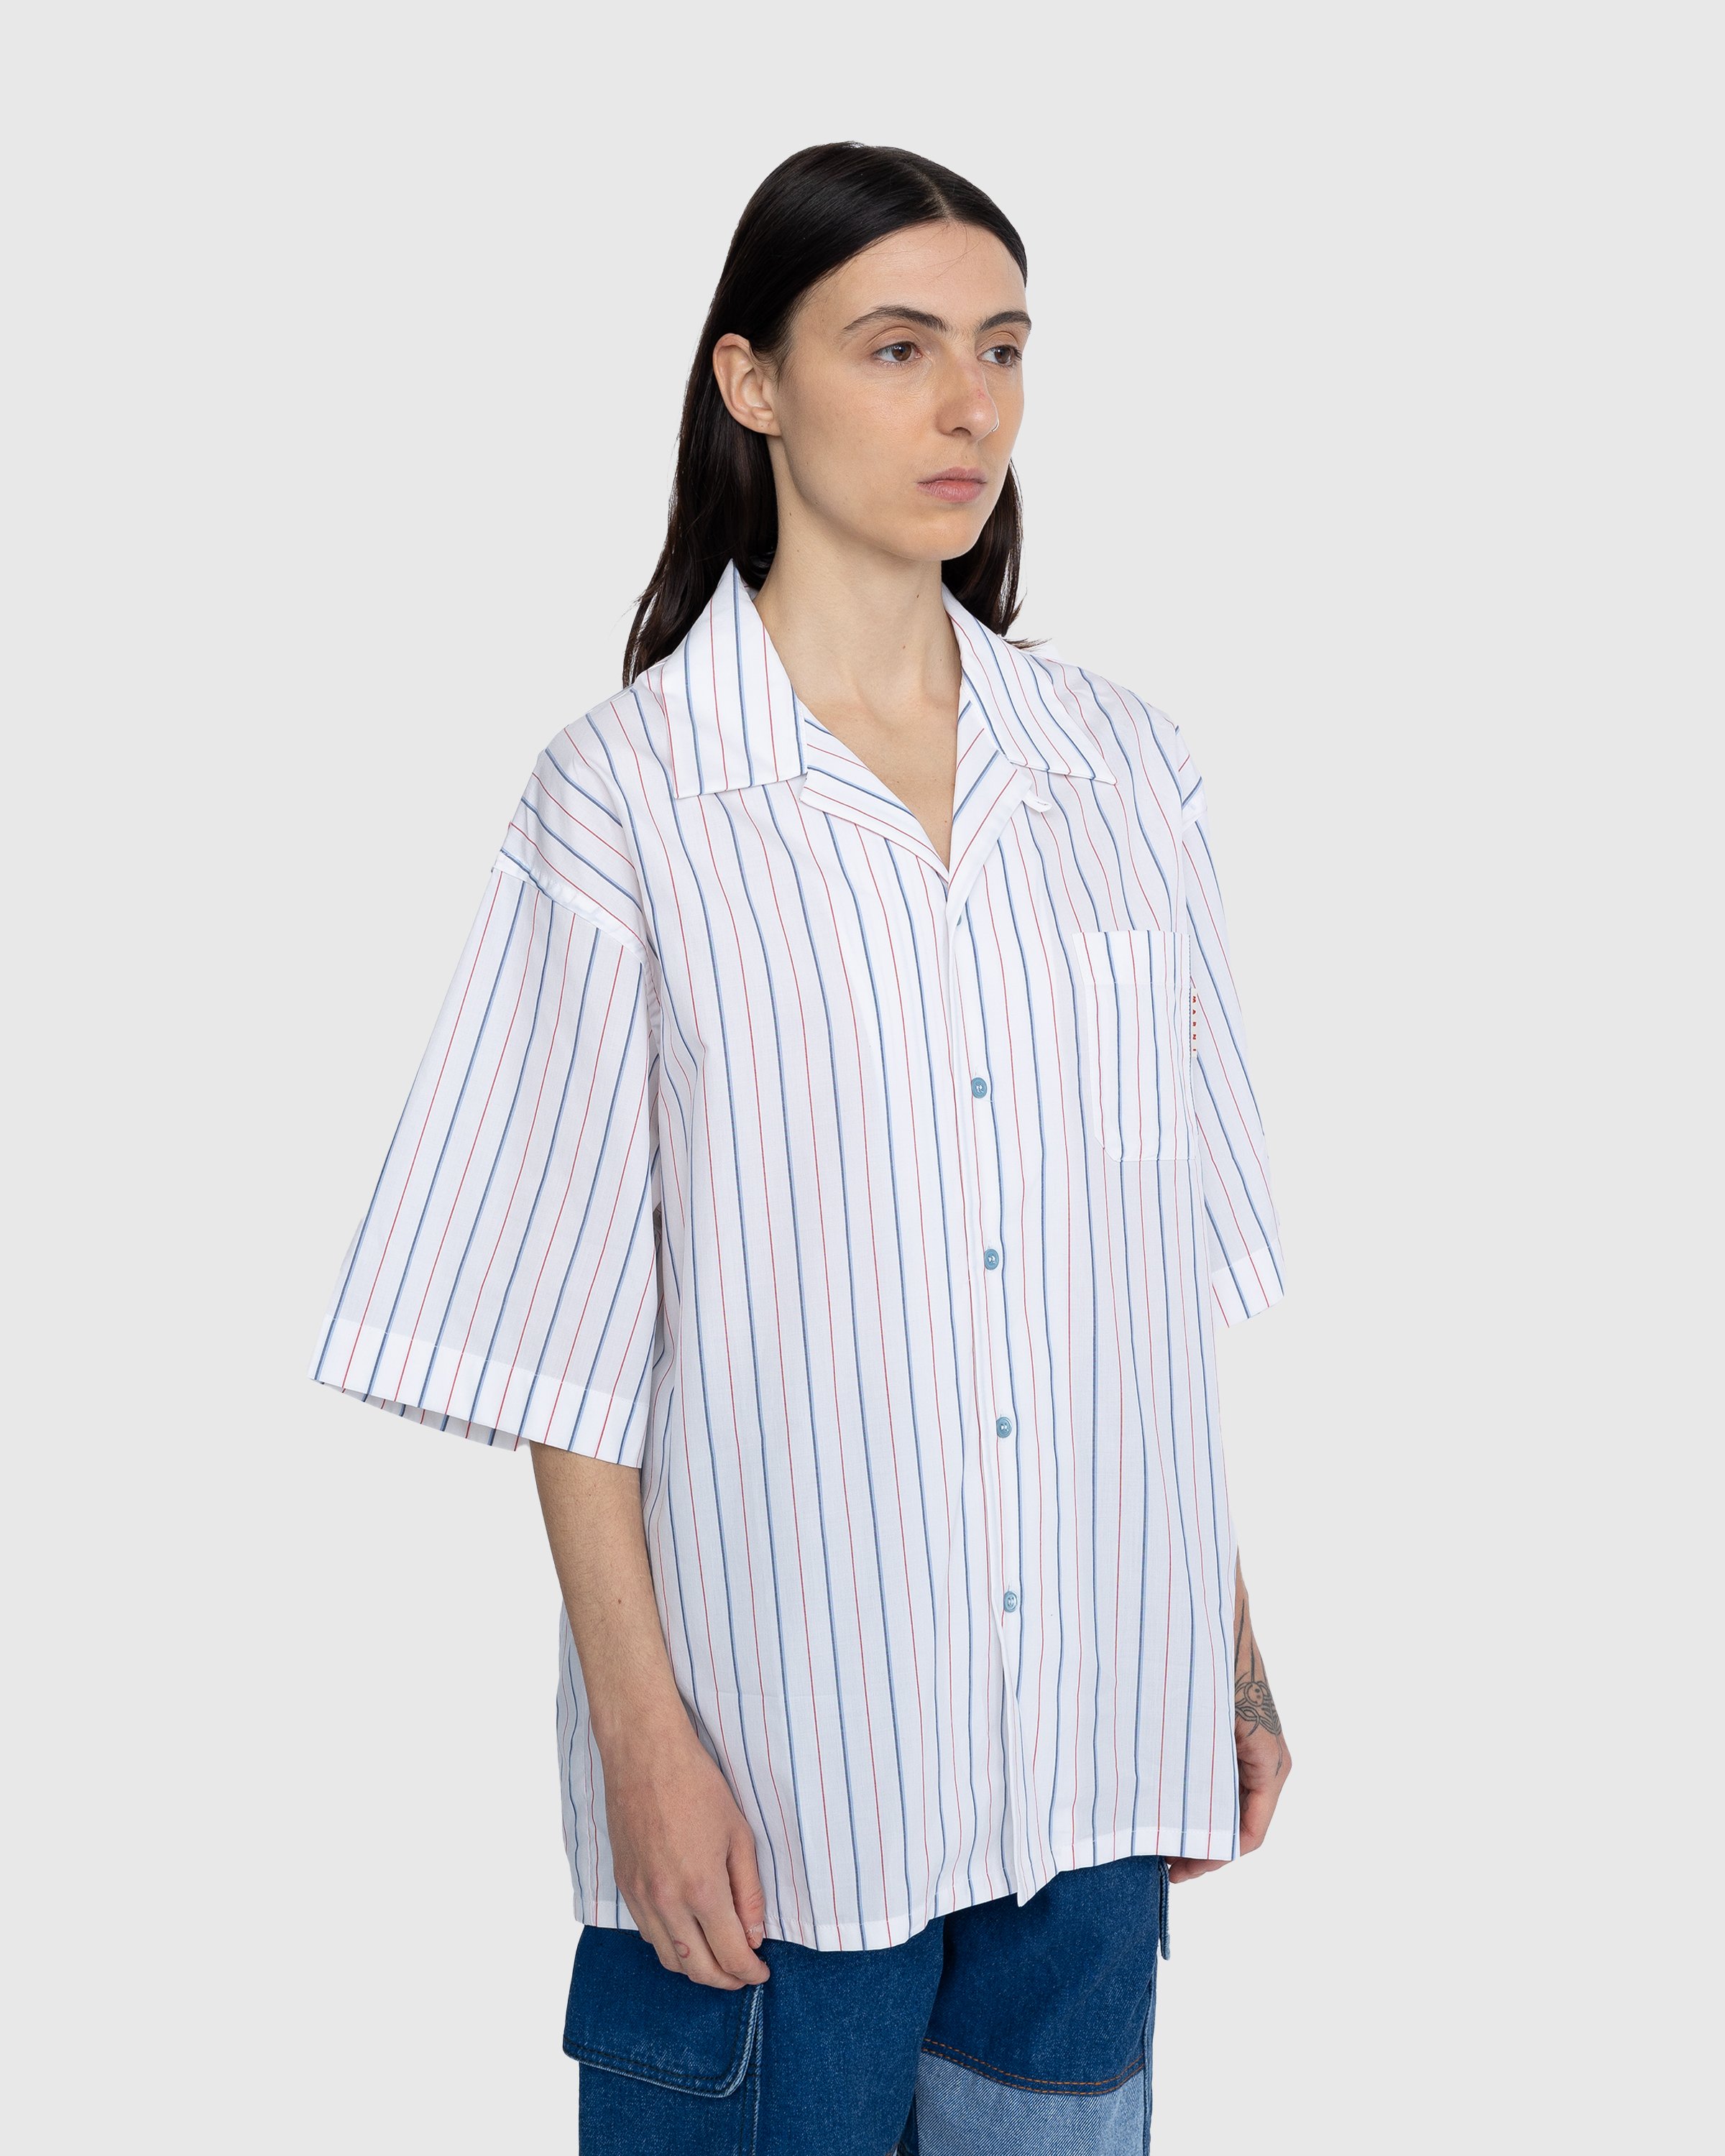 Marni - Striped Button-Up Shirt White - Clothing - White - Image 4